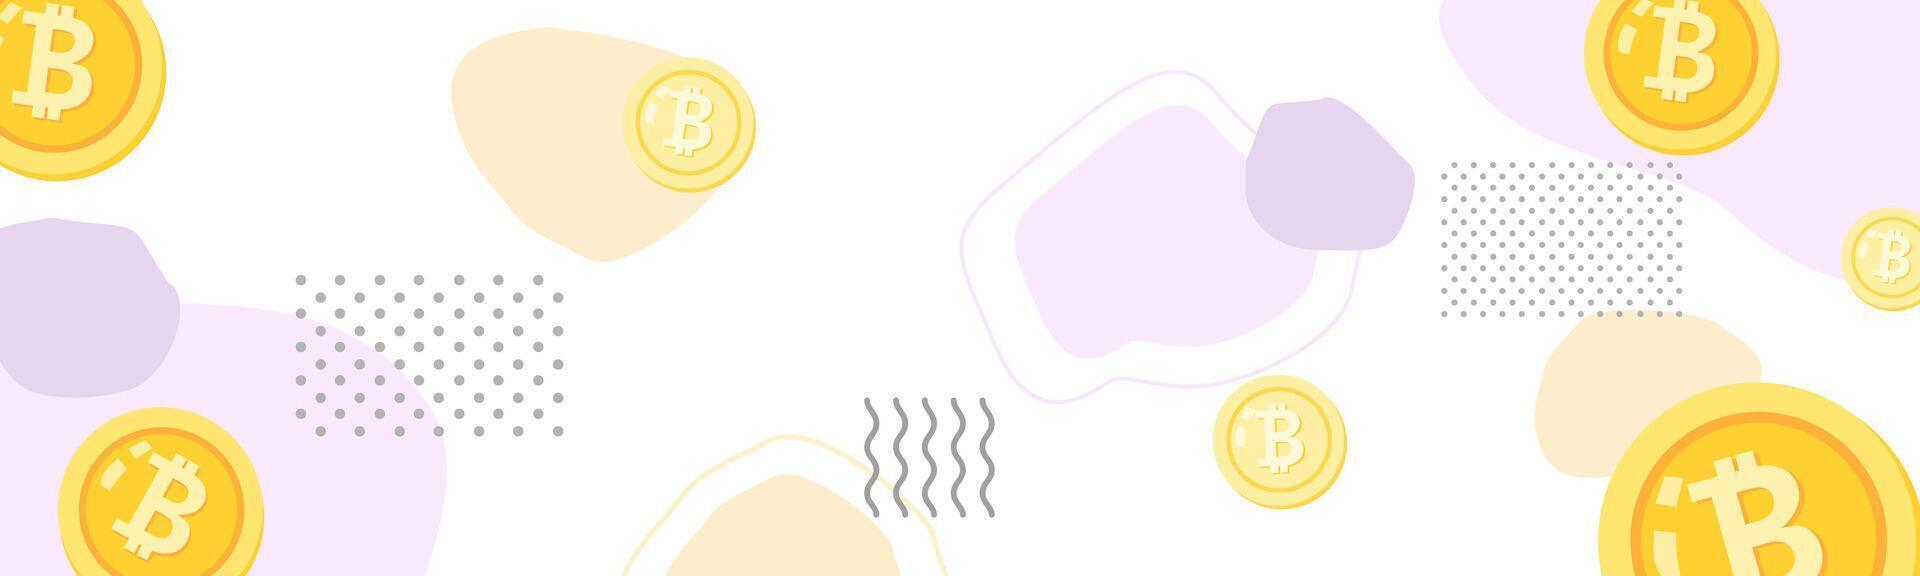 söt pastell abstrakt lila form med bitcoin på vit bakgrund. horisontell bakgrund i kryptovaluta investering begrepp. vektor